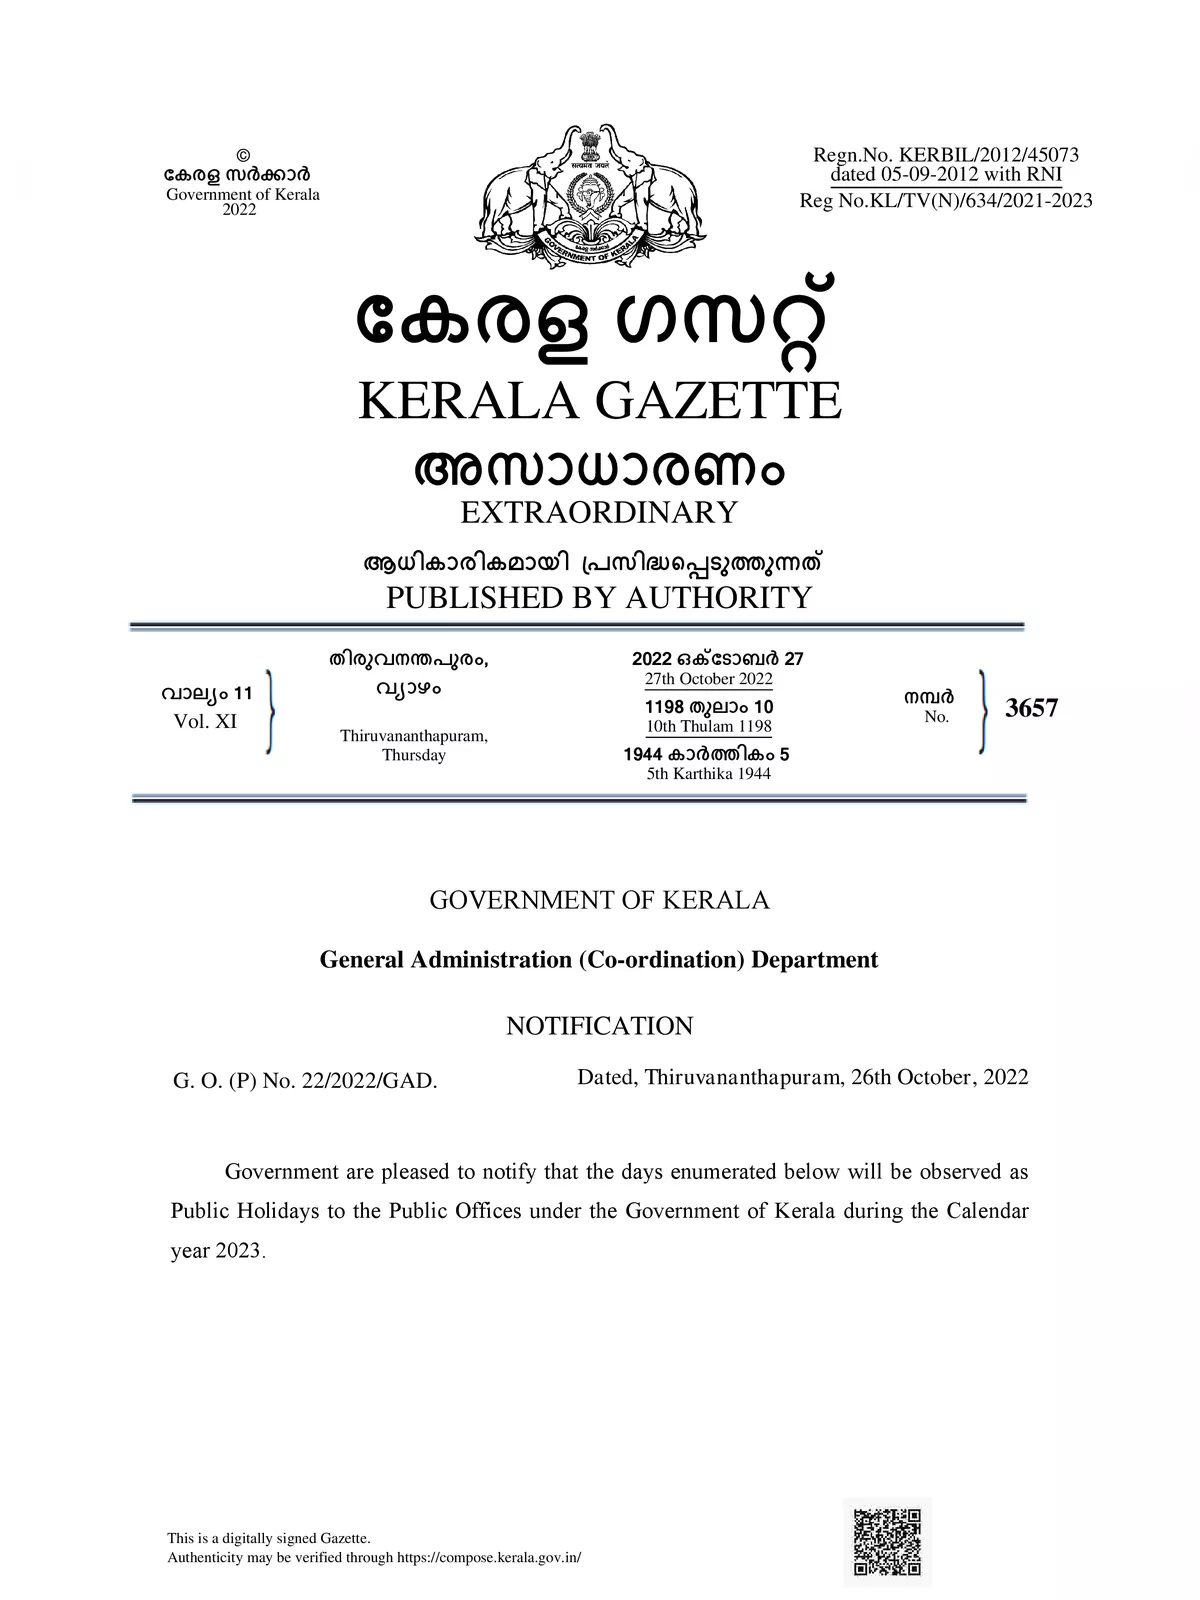 Kerala Government Calendar 2023